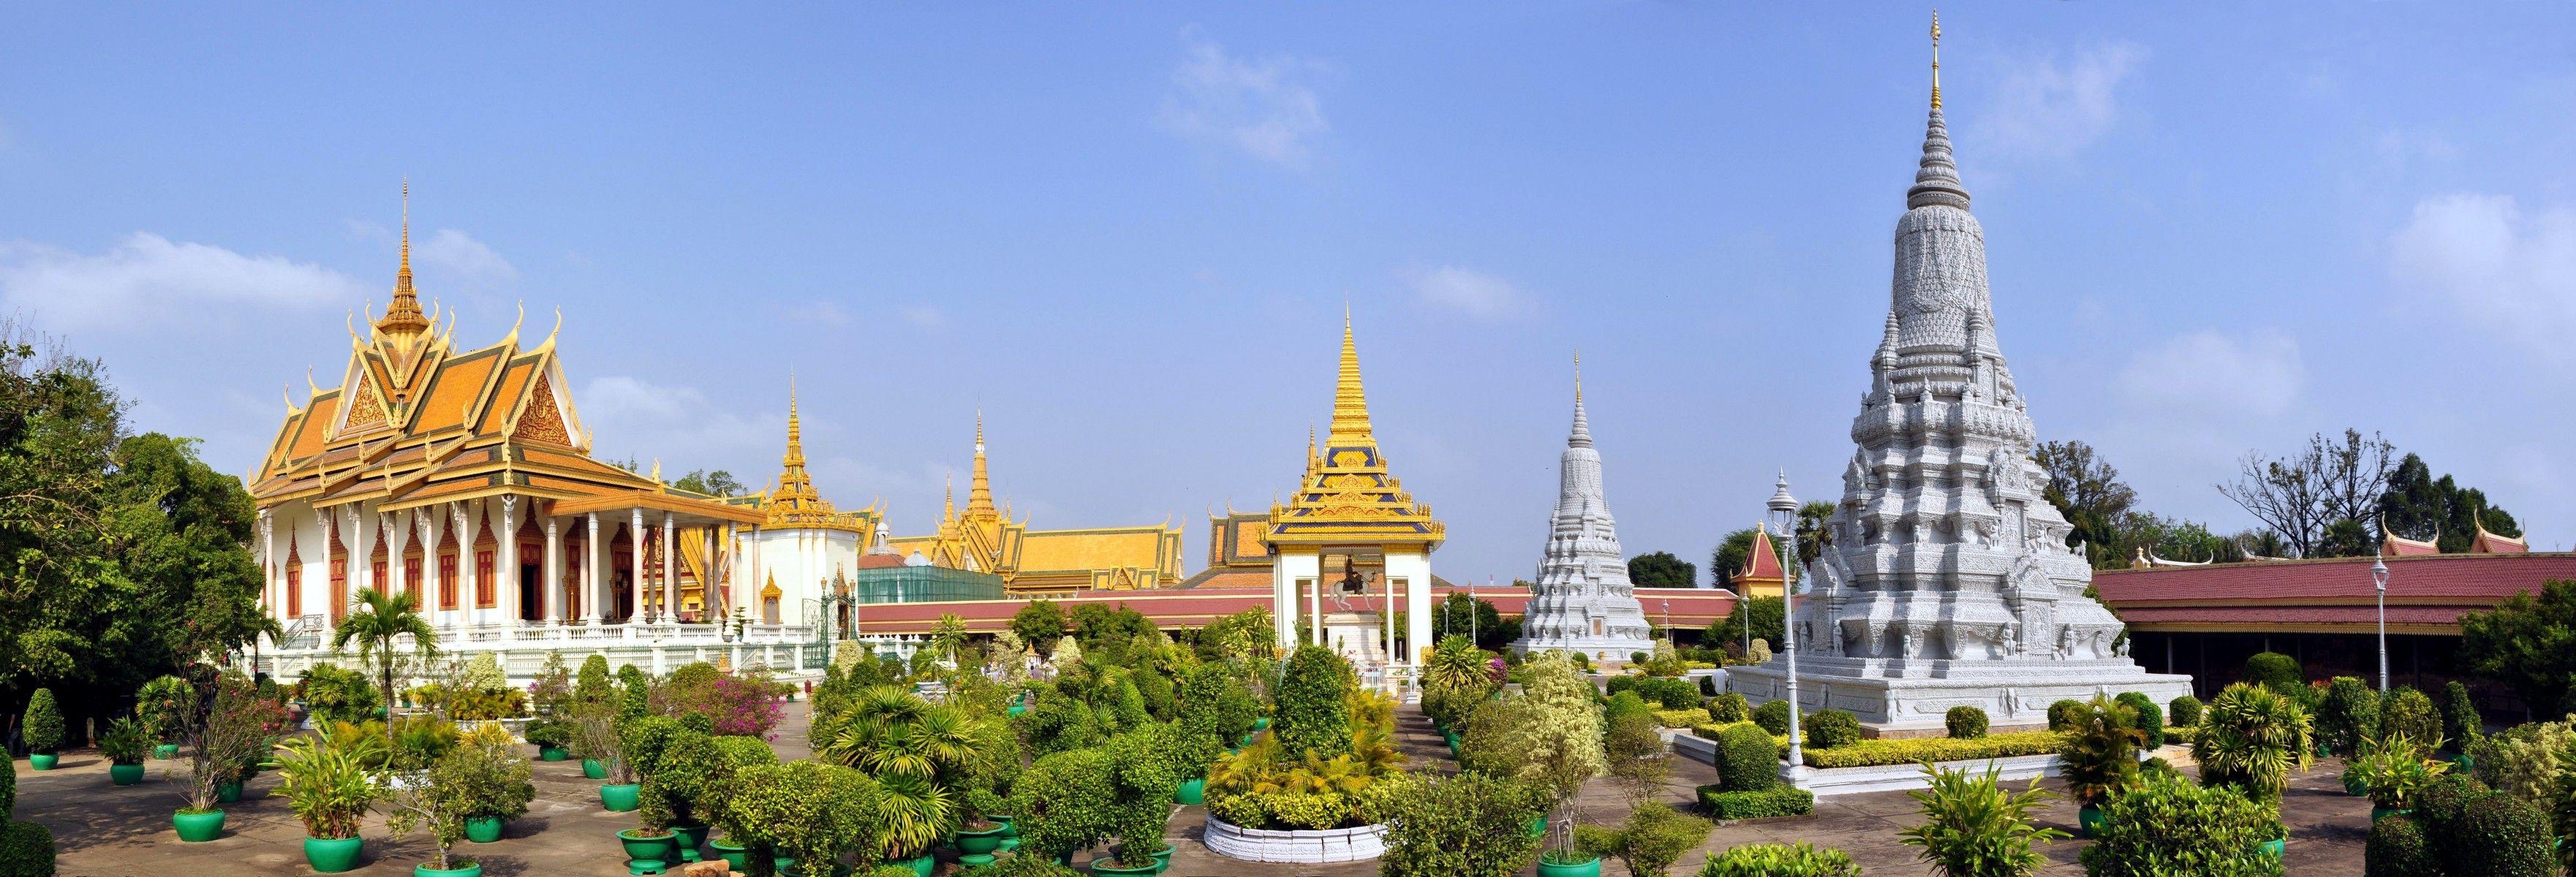 Phnom Penh travels, Beautiful Cambodian city, Cultural landmarks, Vibrant street life, 3530x1200 Dual Screen Desktop